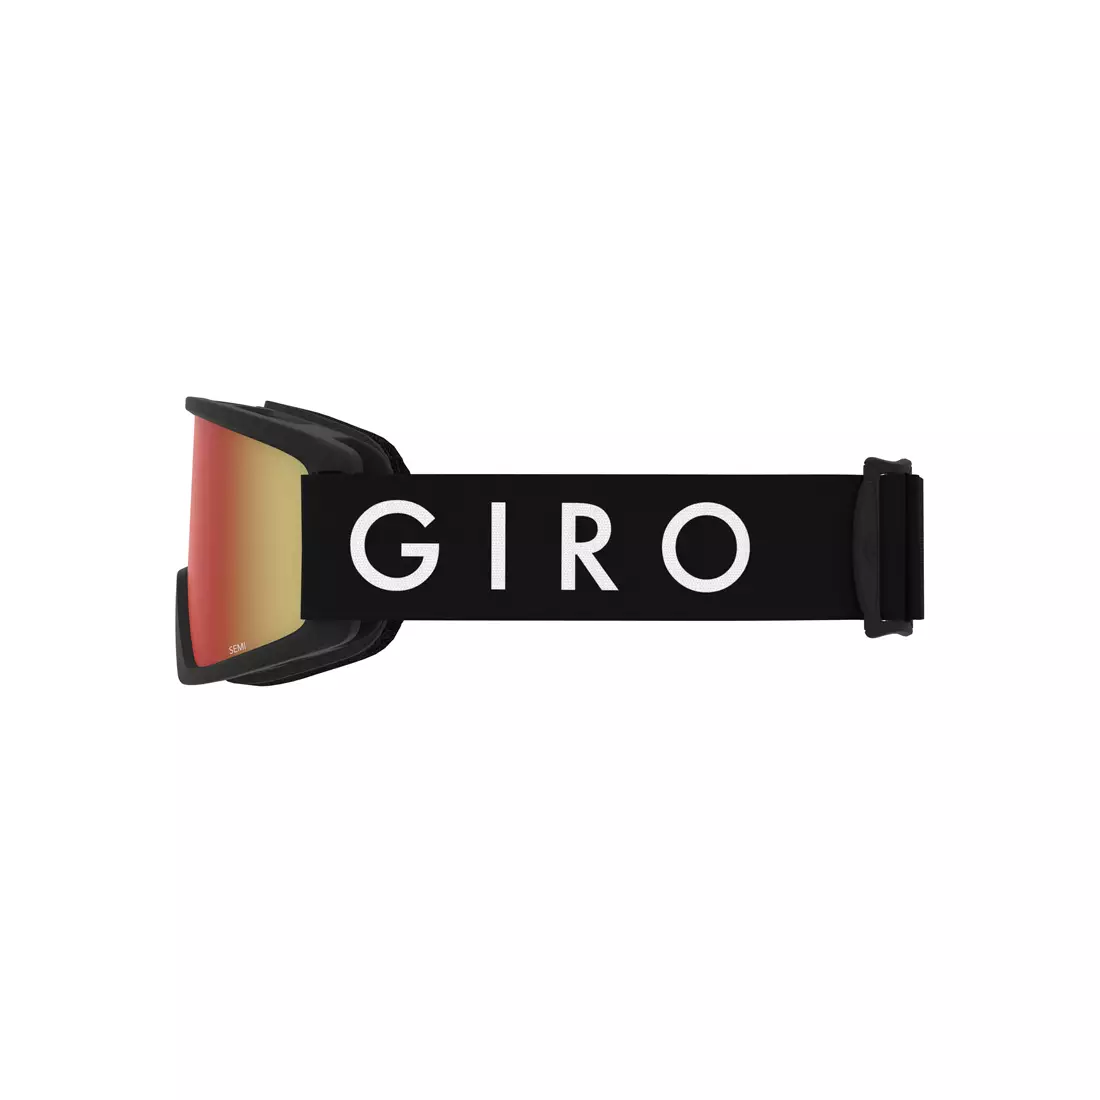 Sí / snowboard szemüveg GIRO SEMI BLACK CORE GR-7083510